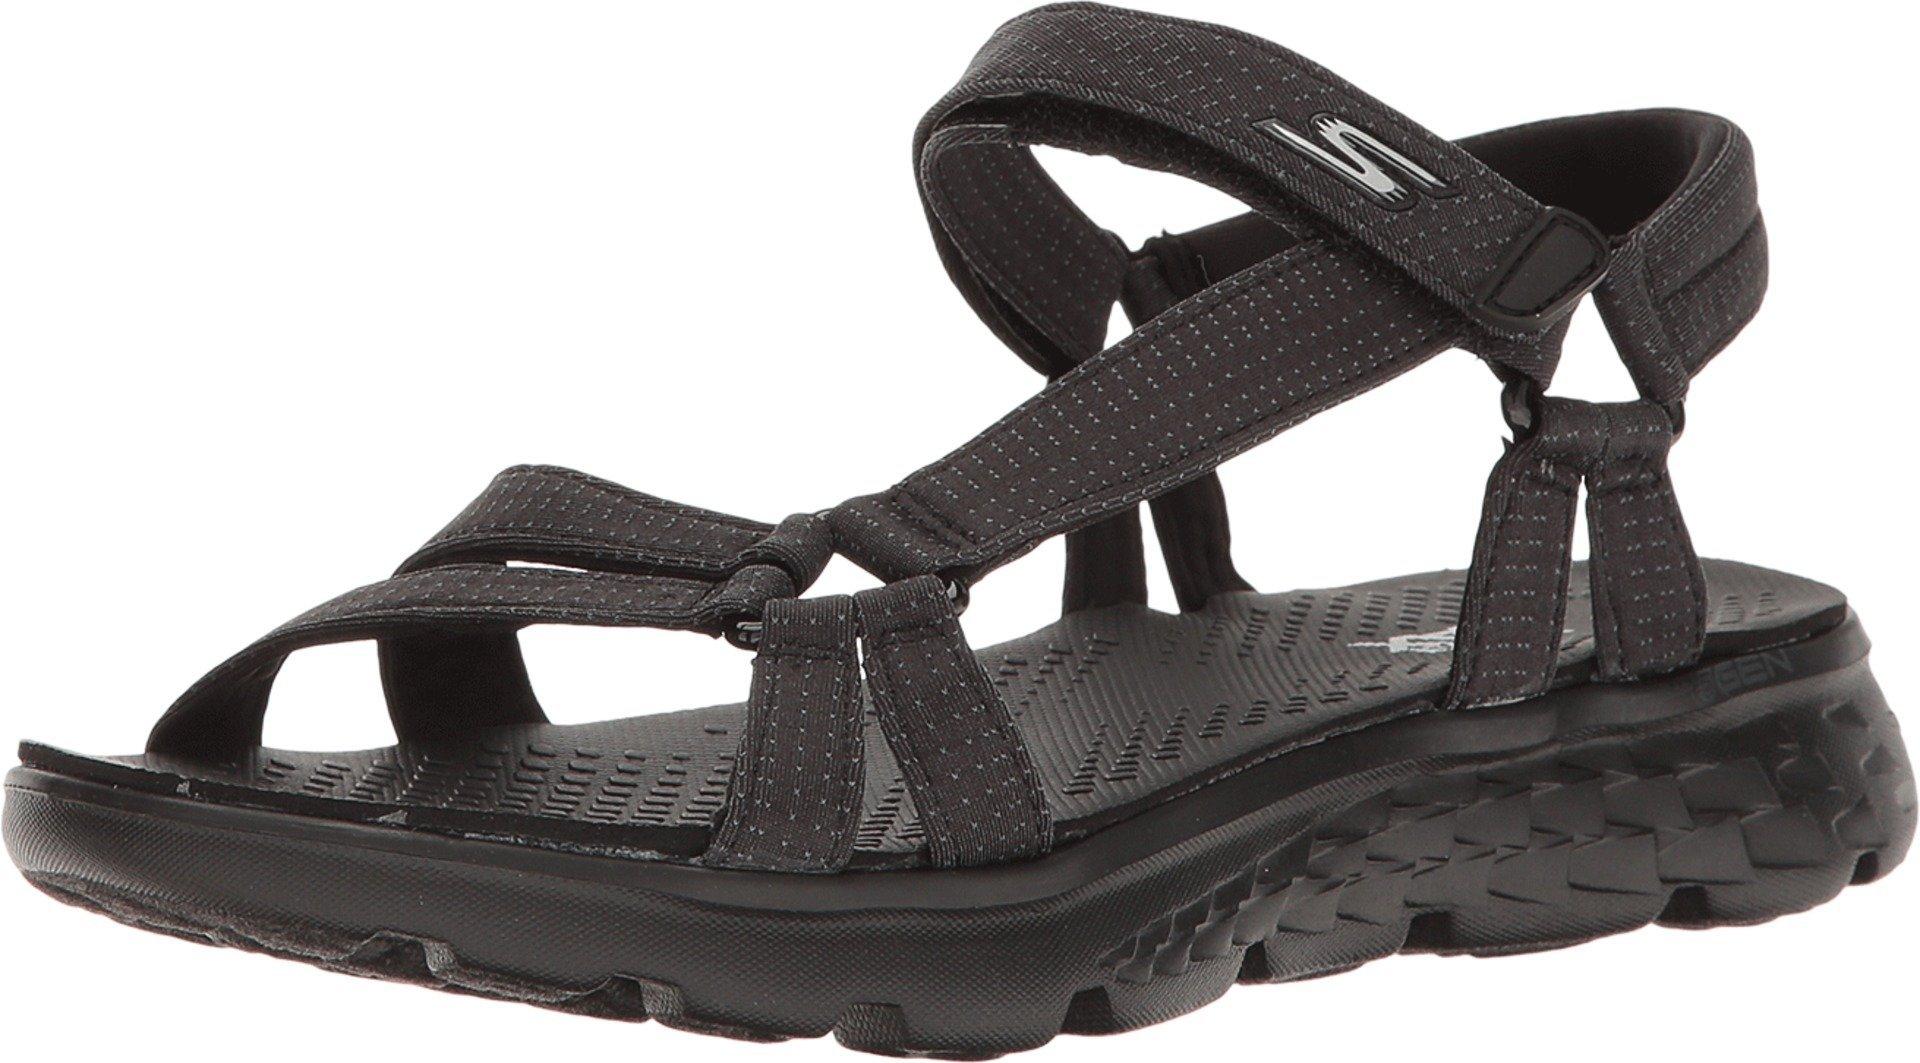 Skechers On-the-go 600-brilliancy-15316 Sport Sandal in Black/Grey (Black)  - Save 69% - Lyst